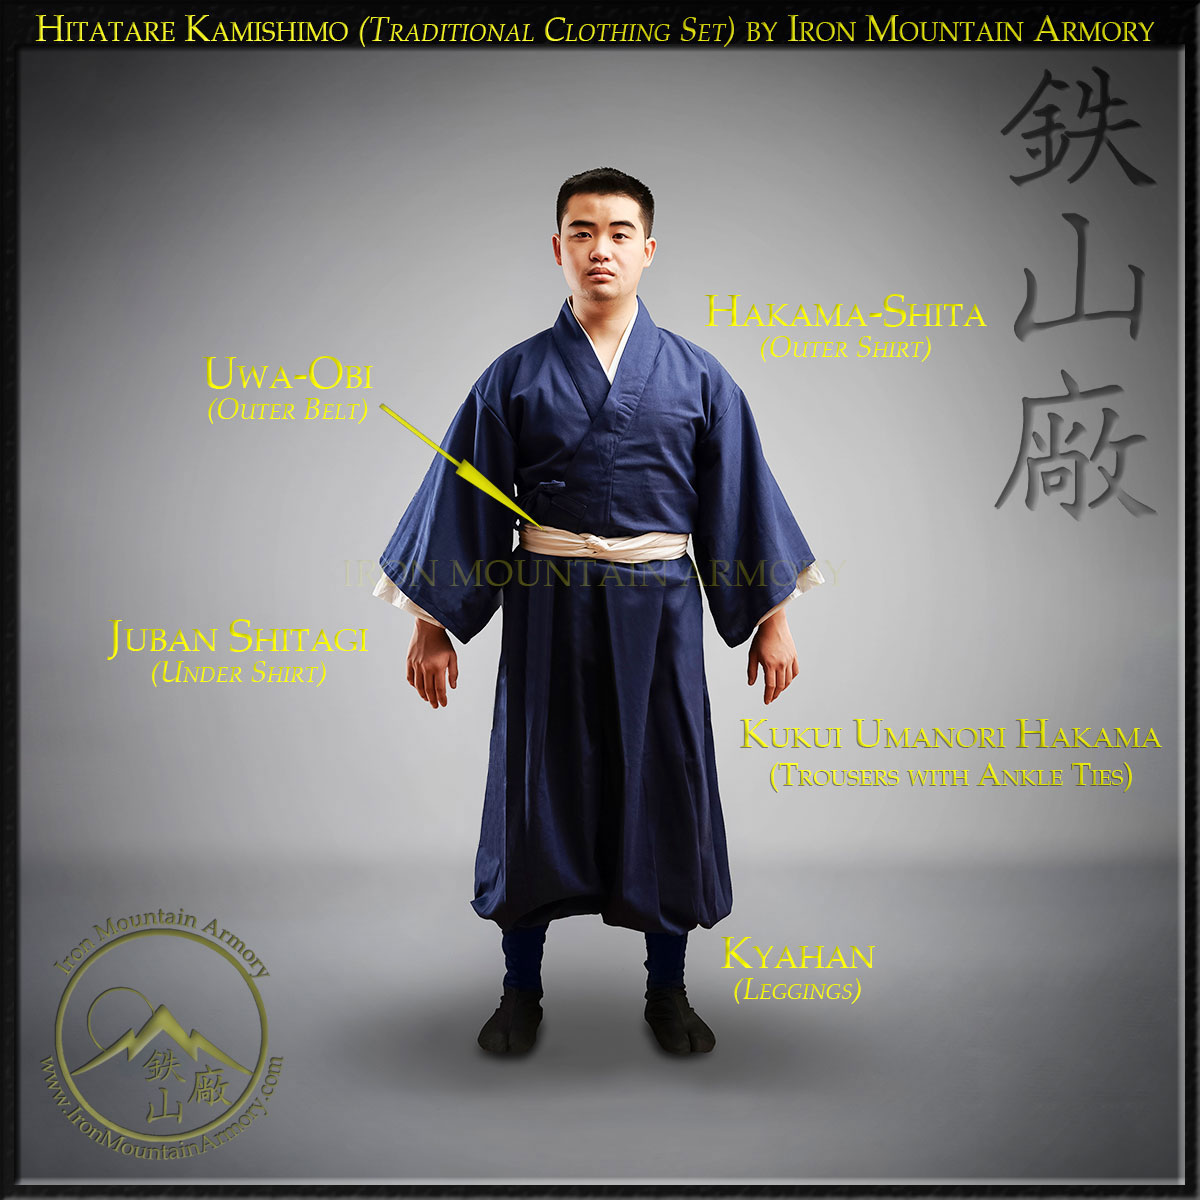 Kamishimo Hitatare (Traditional Clothing Set)